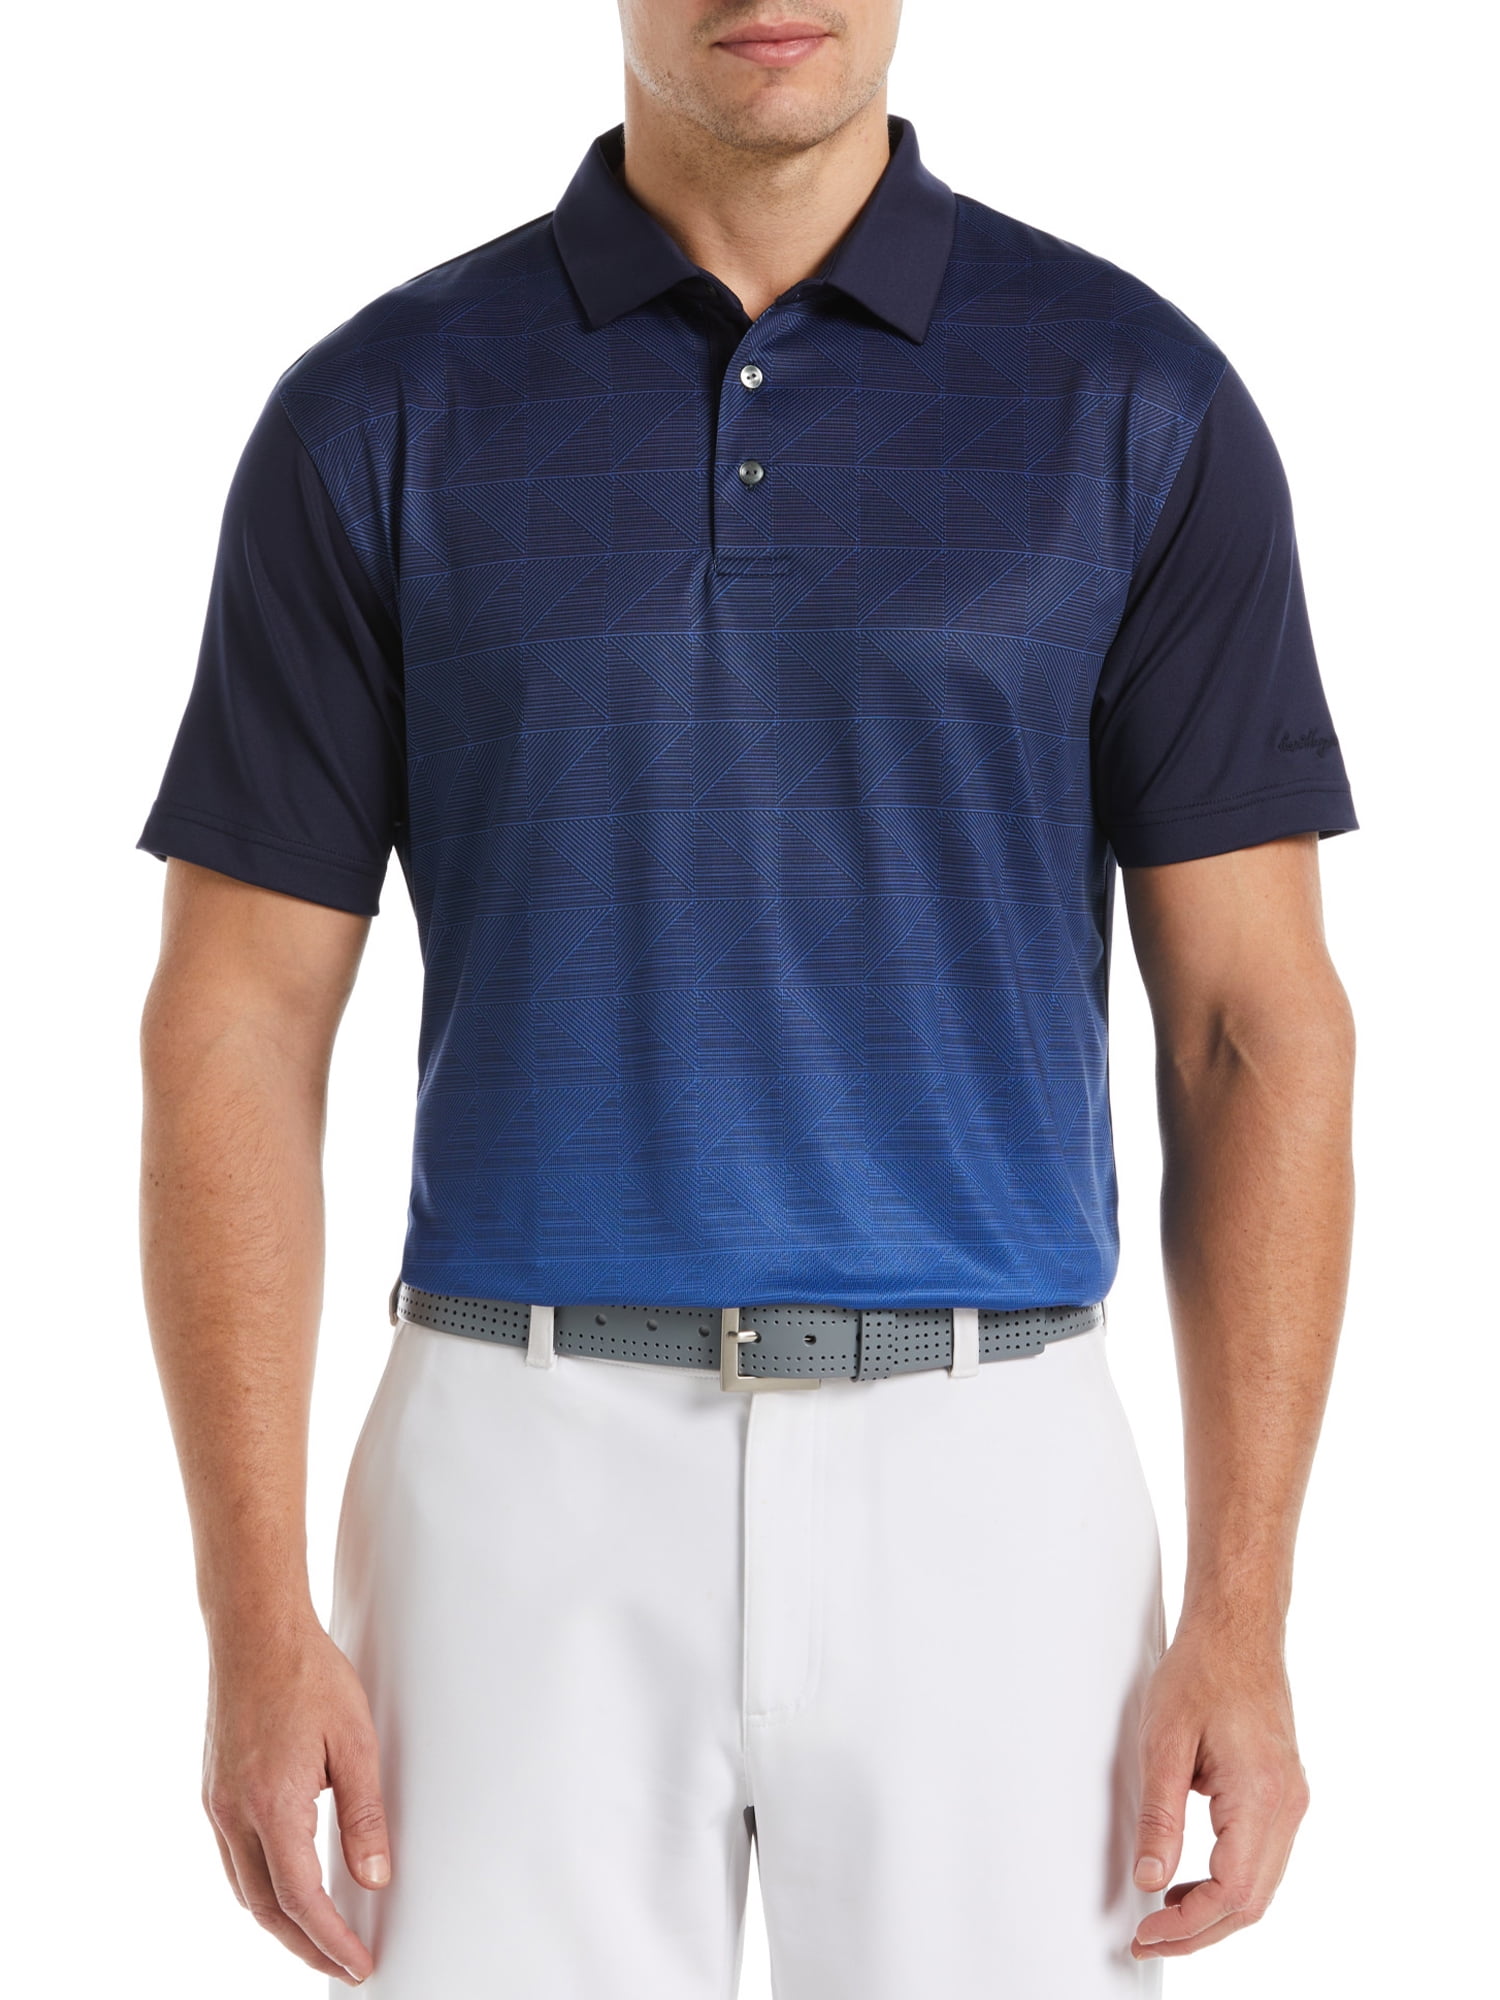 Ben Hogan Performance Men's Fading Geo Print Golf Polo Shirt - Walmart.com